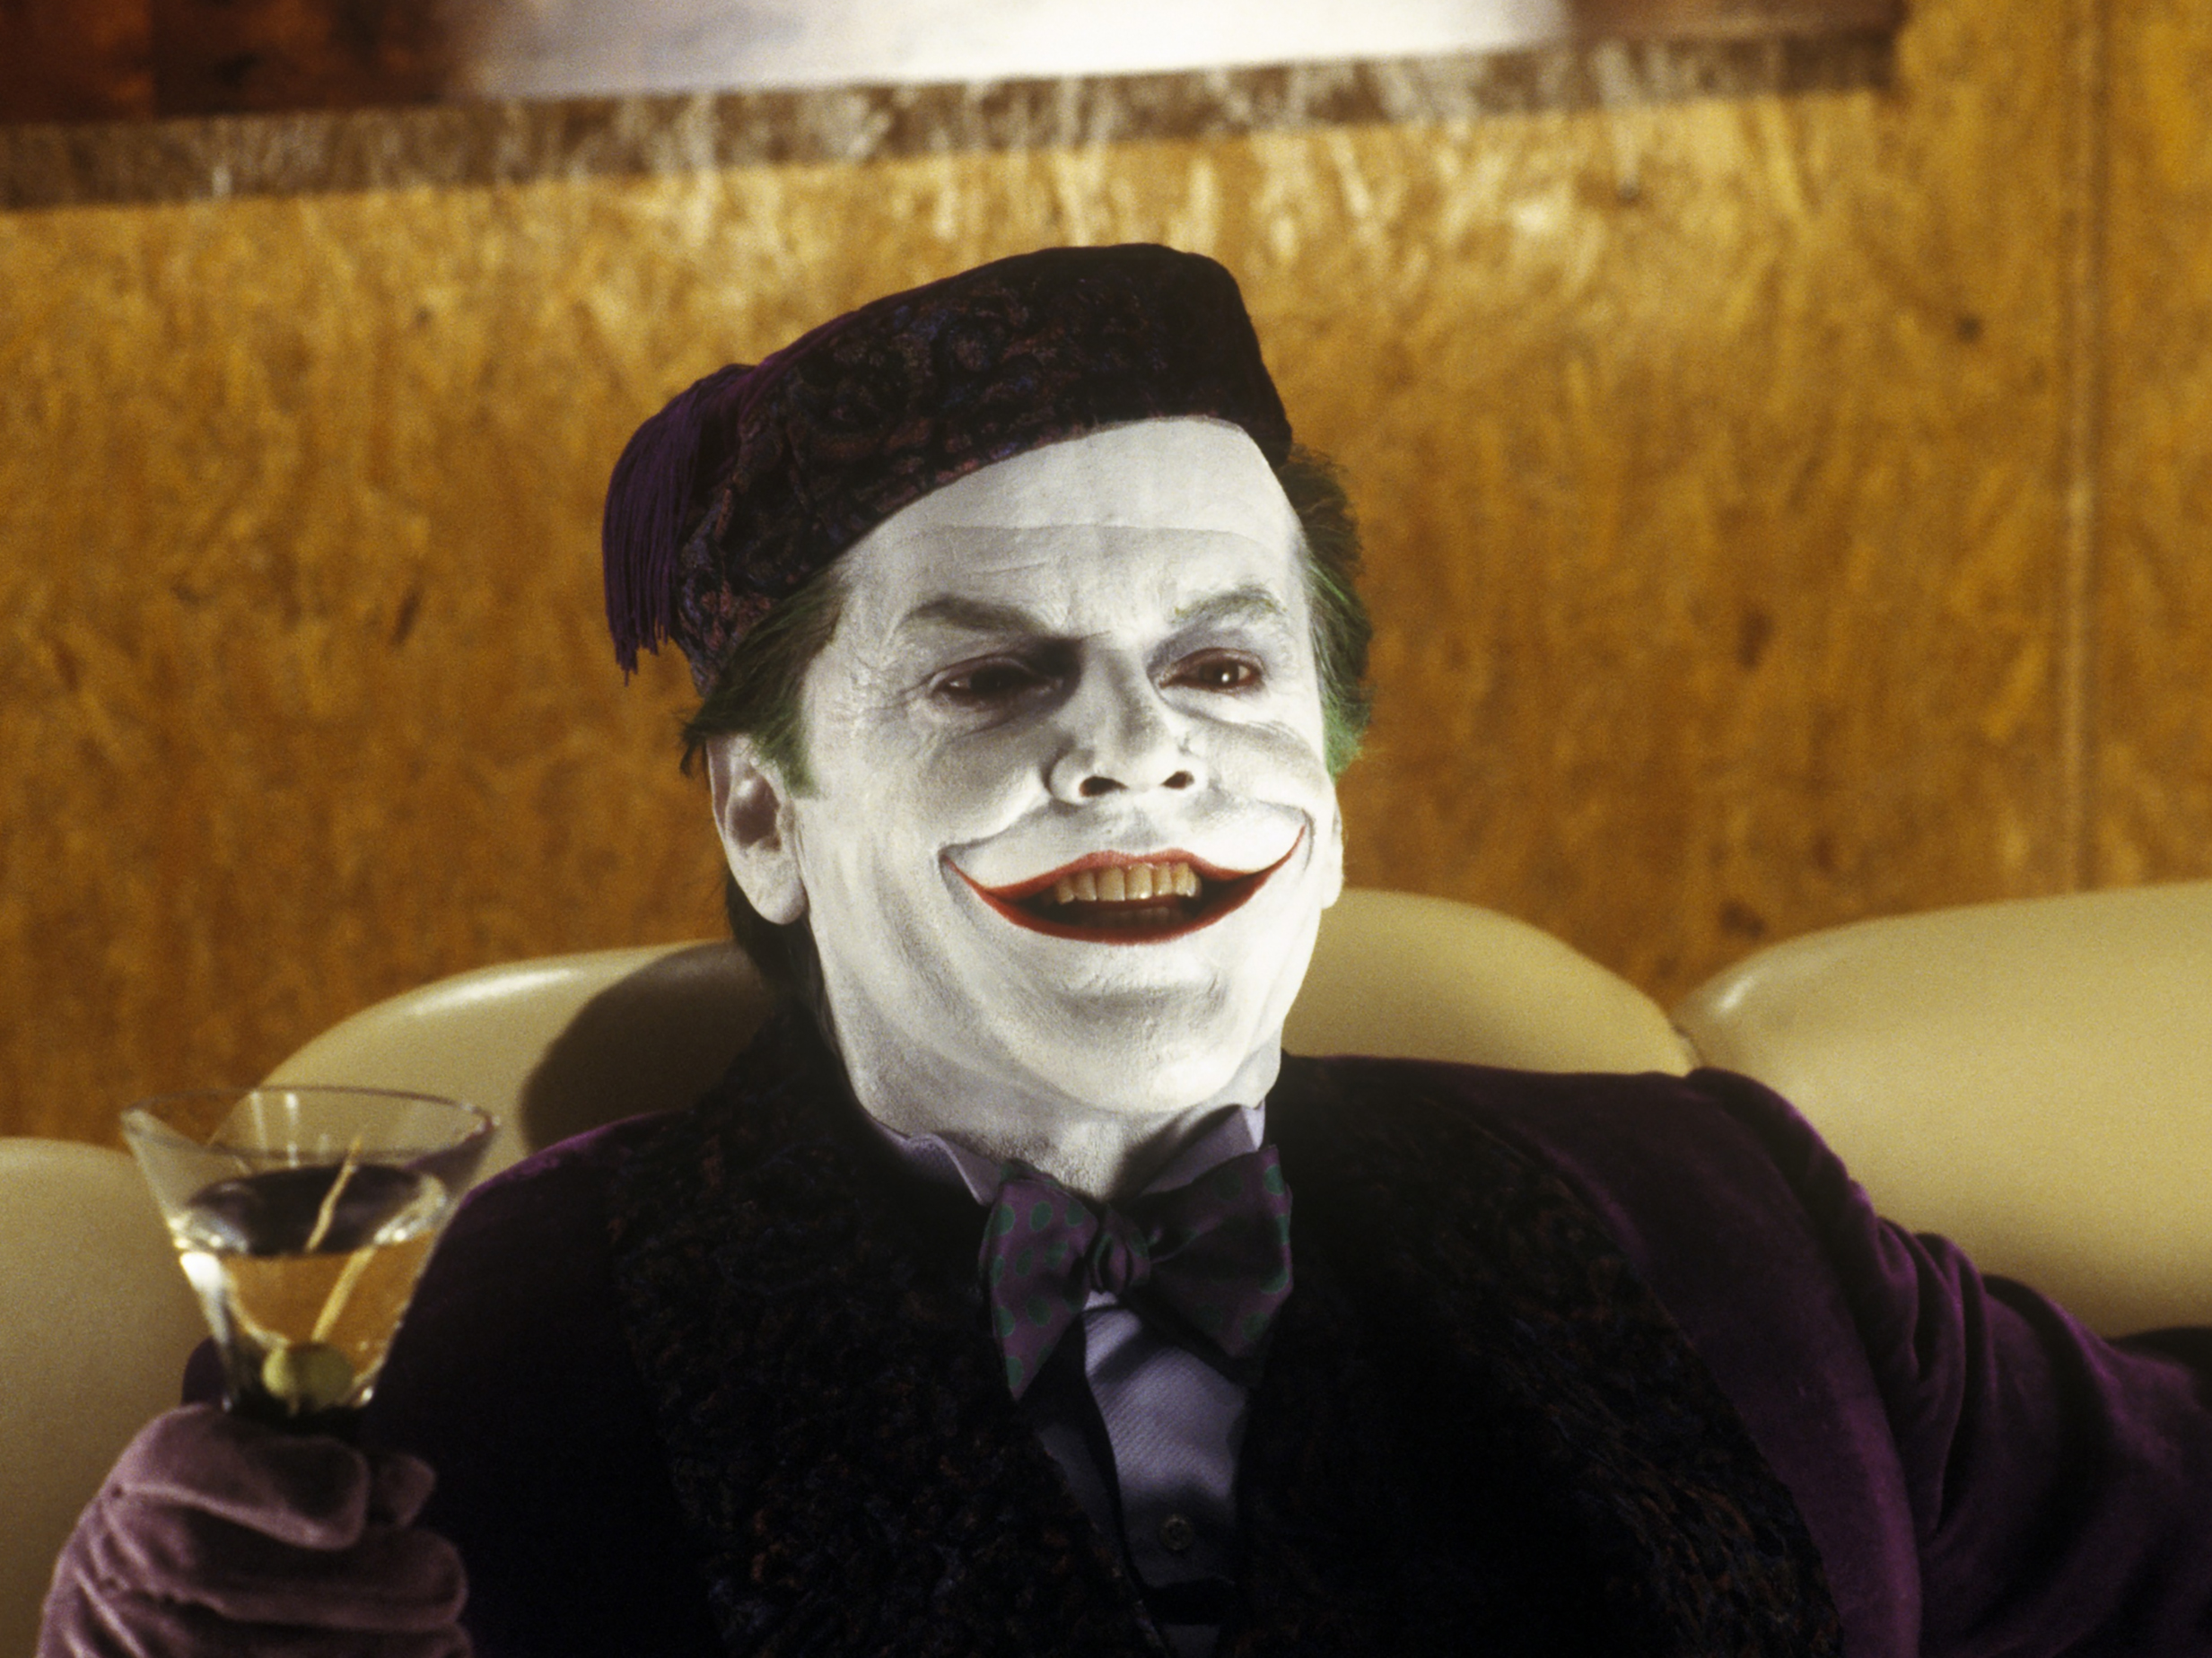 Jack Nicholson in “Batman” (1989) 